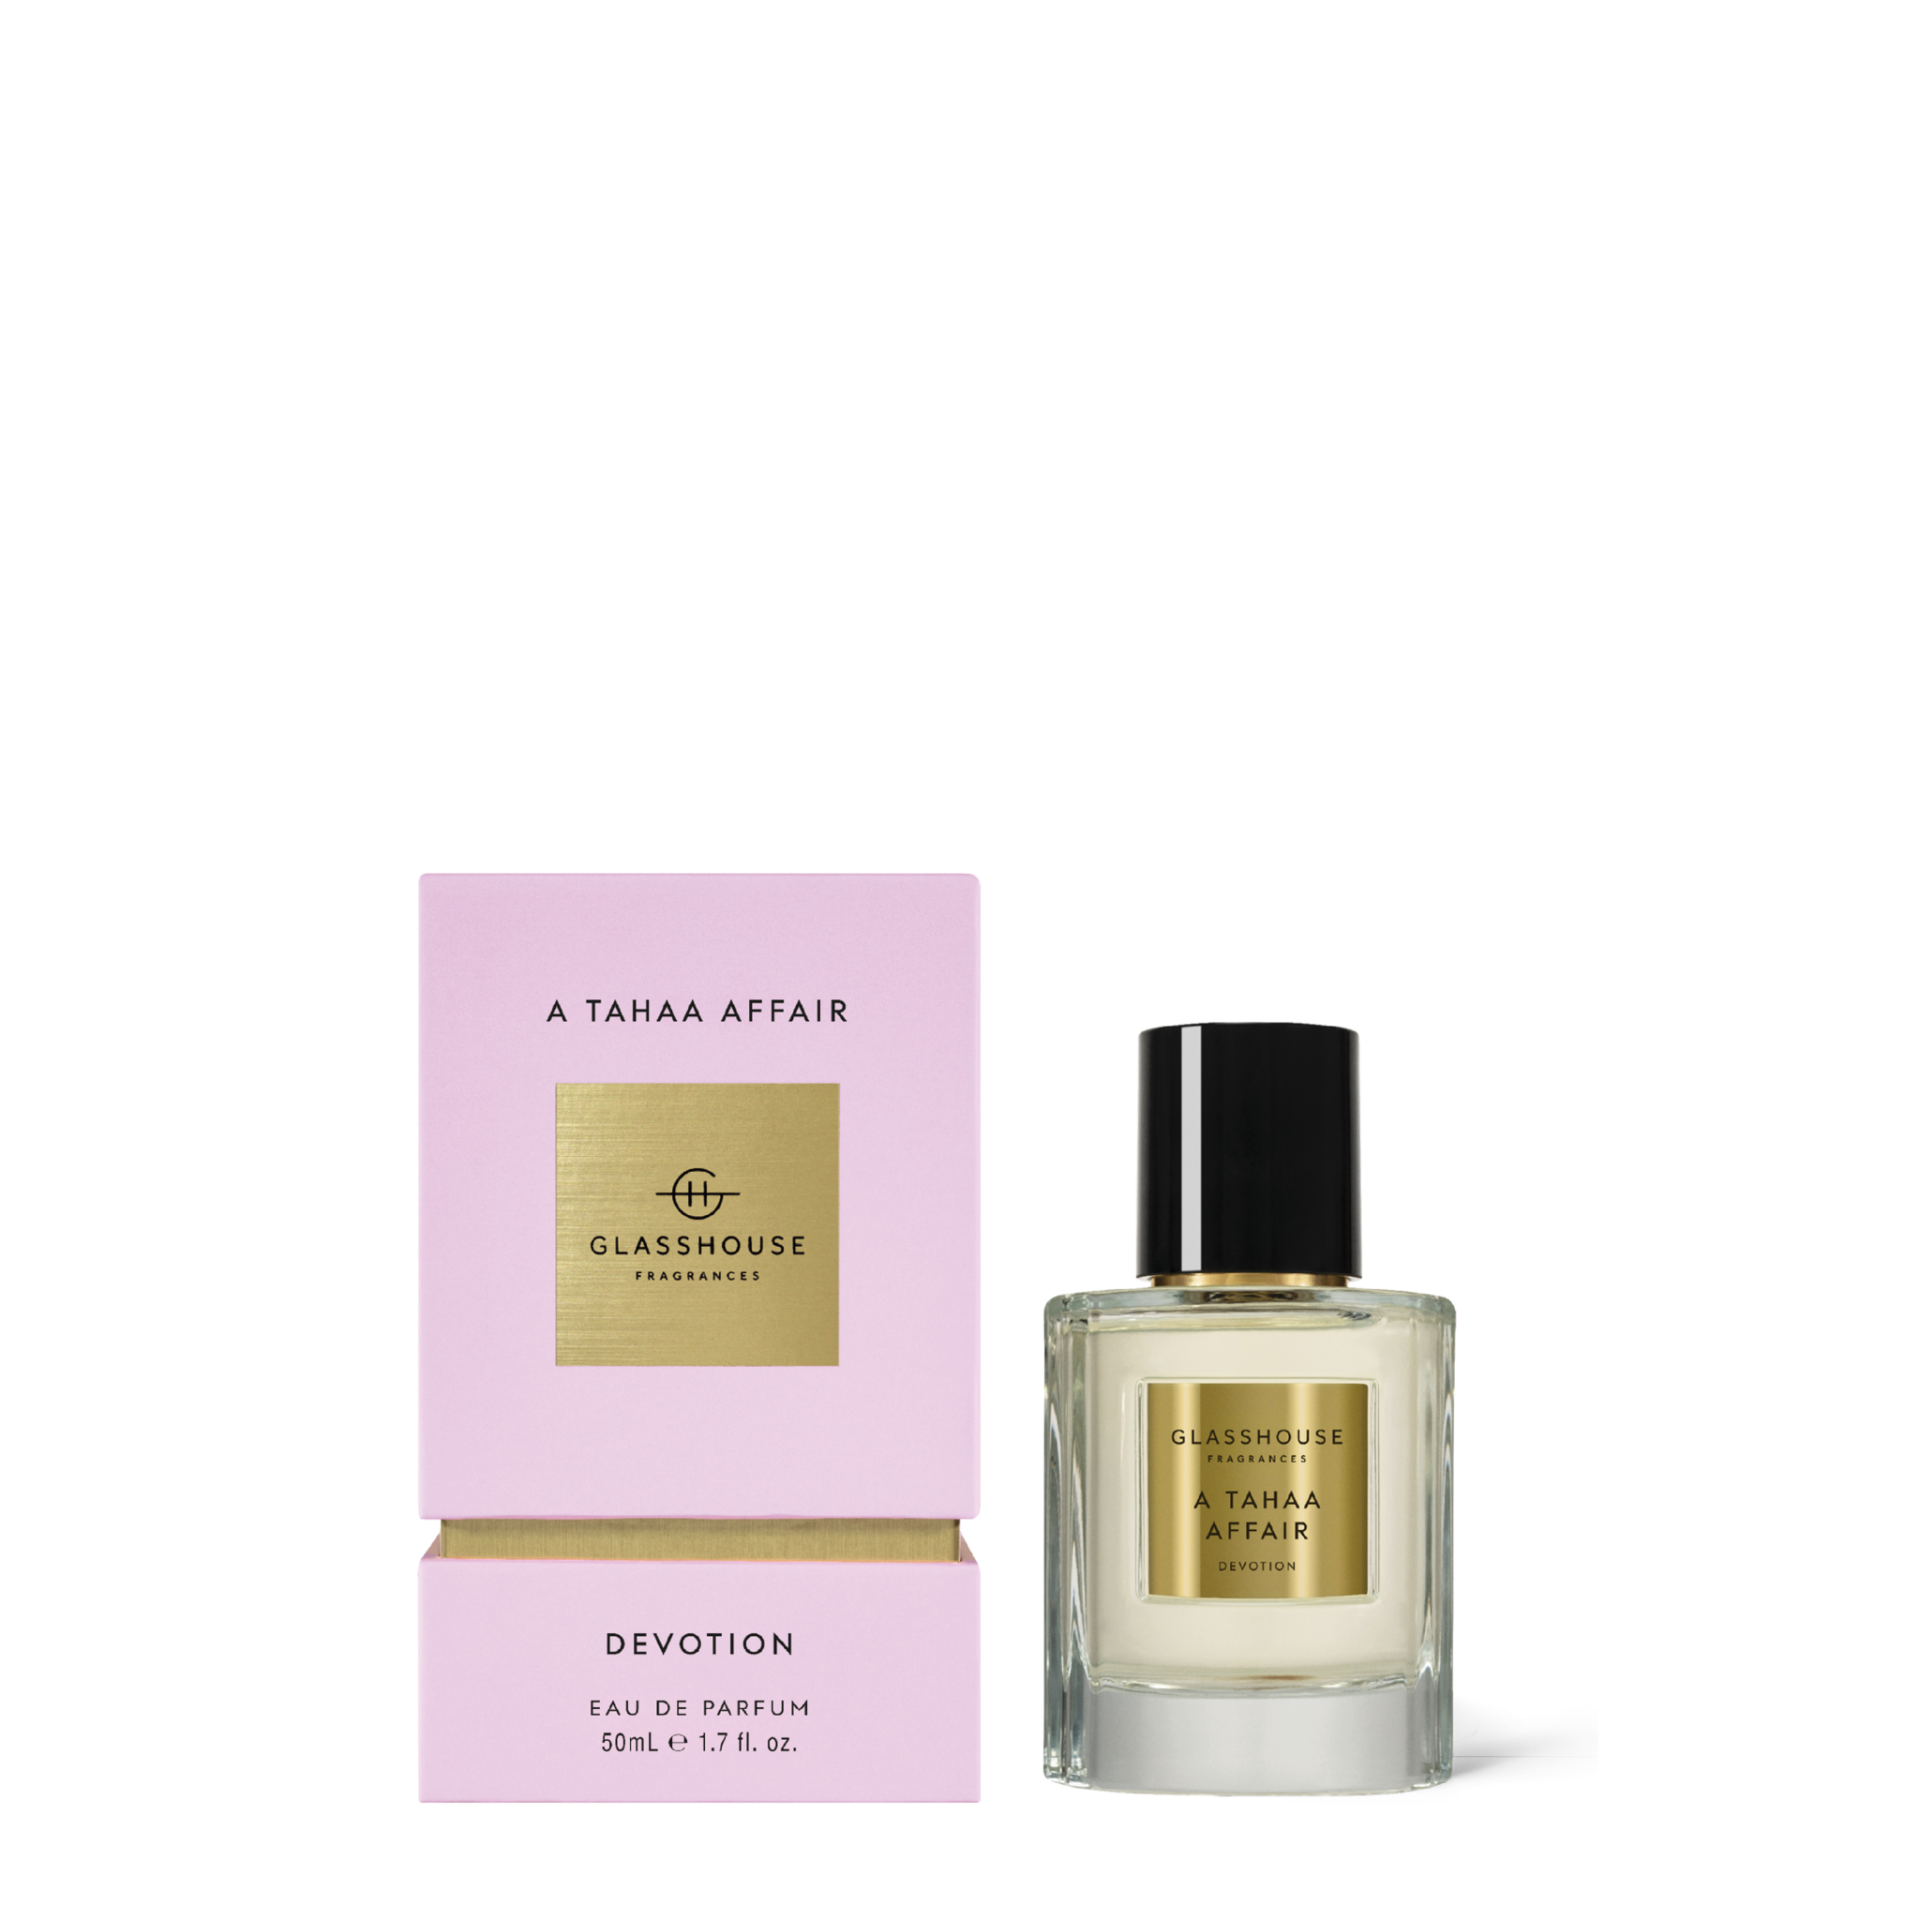 glasshouse-eau-de-parfum-a-tahaa-affair-magnolia-home-gift